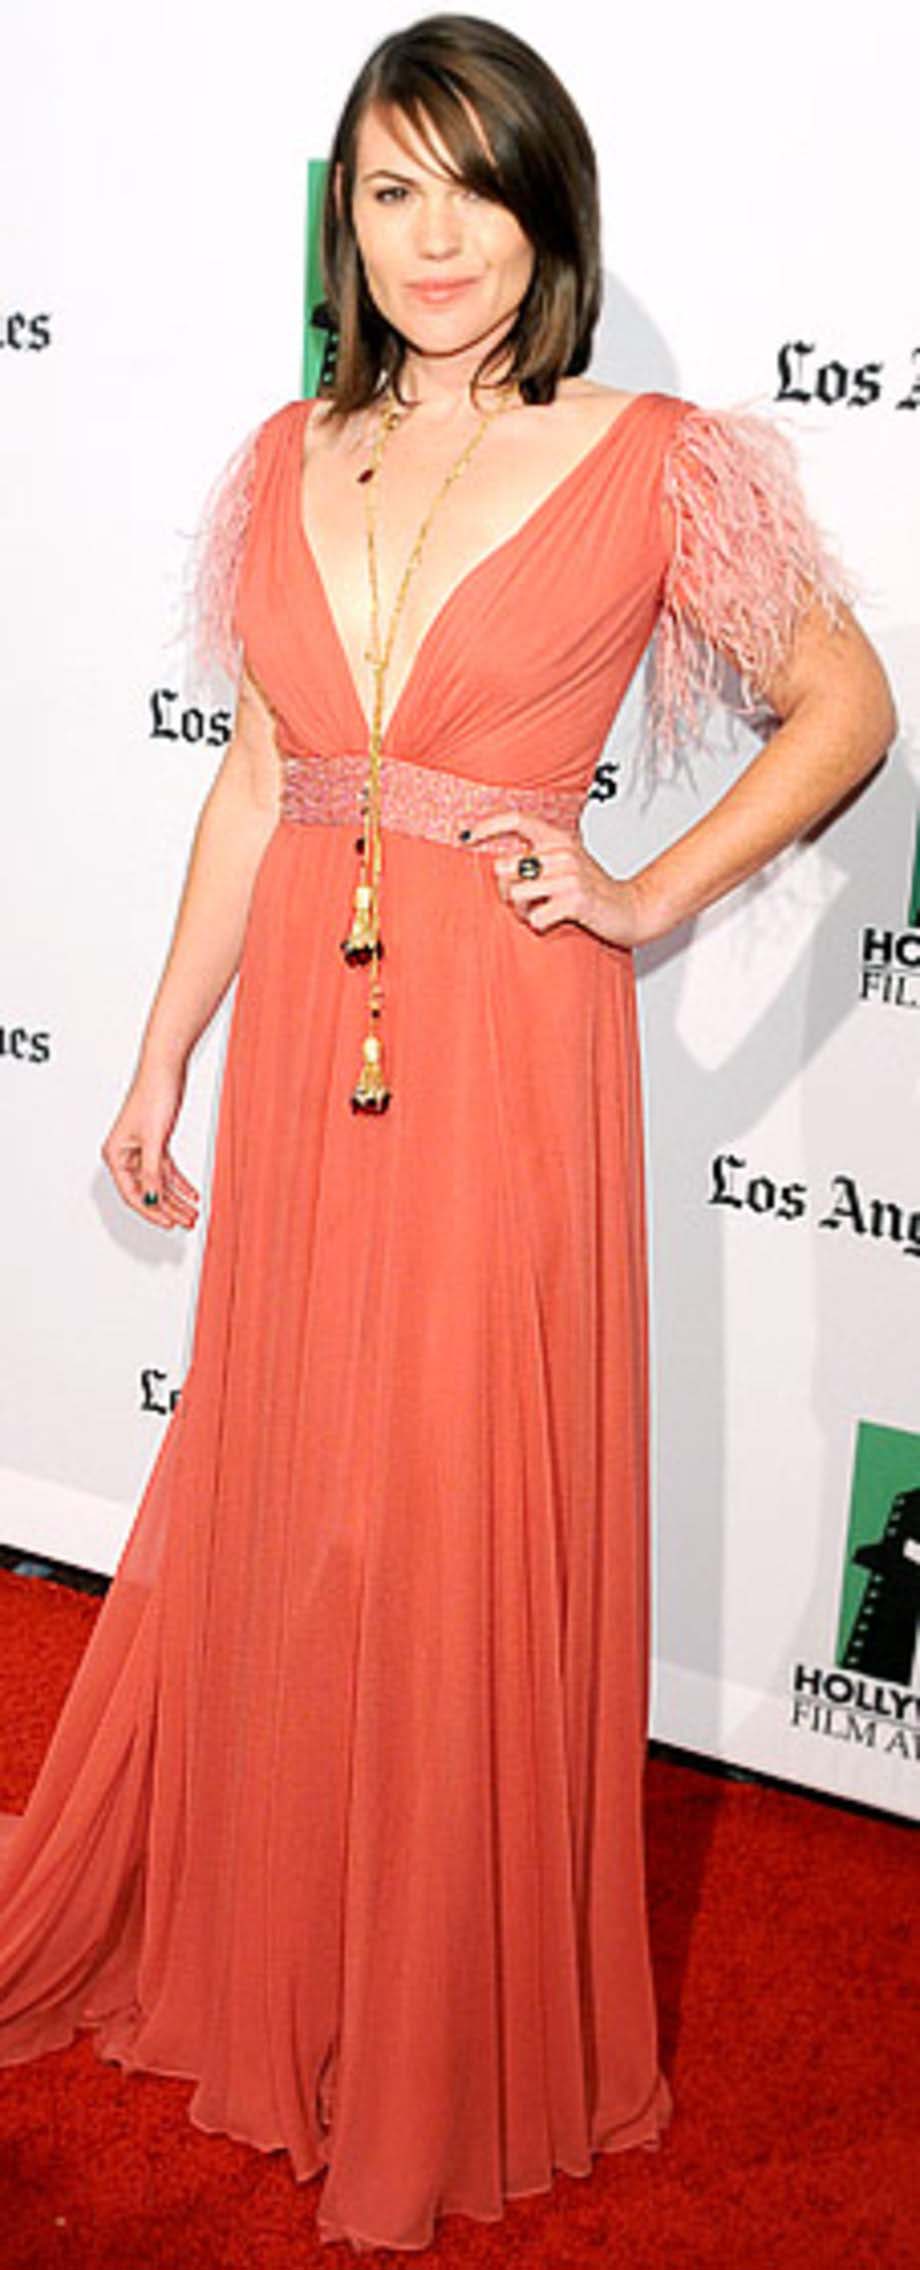 Us Weekly Clea Duvall at Hollywood Film Awards